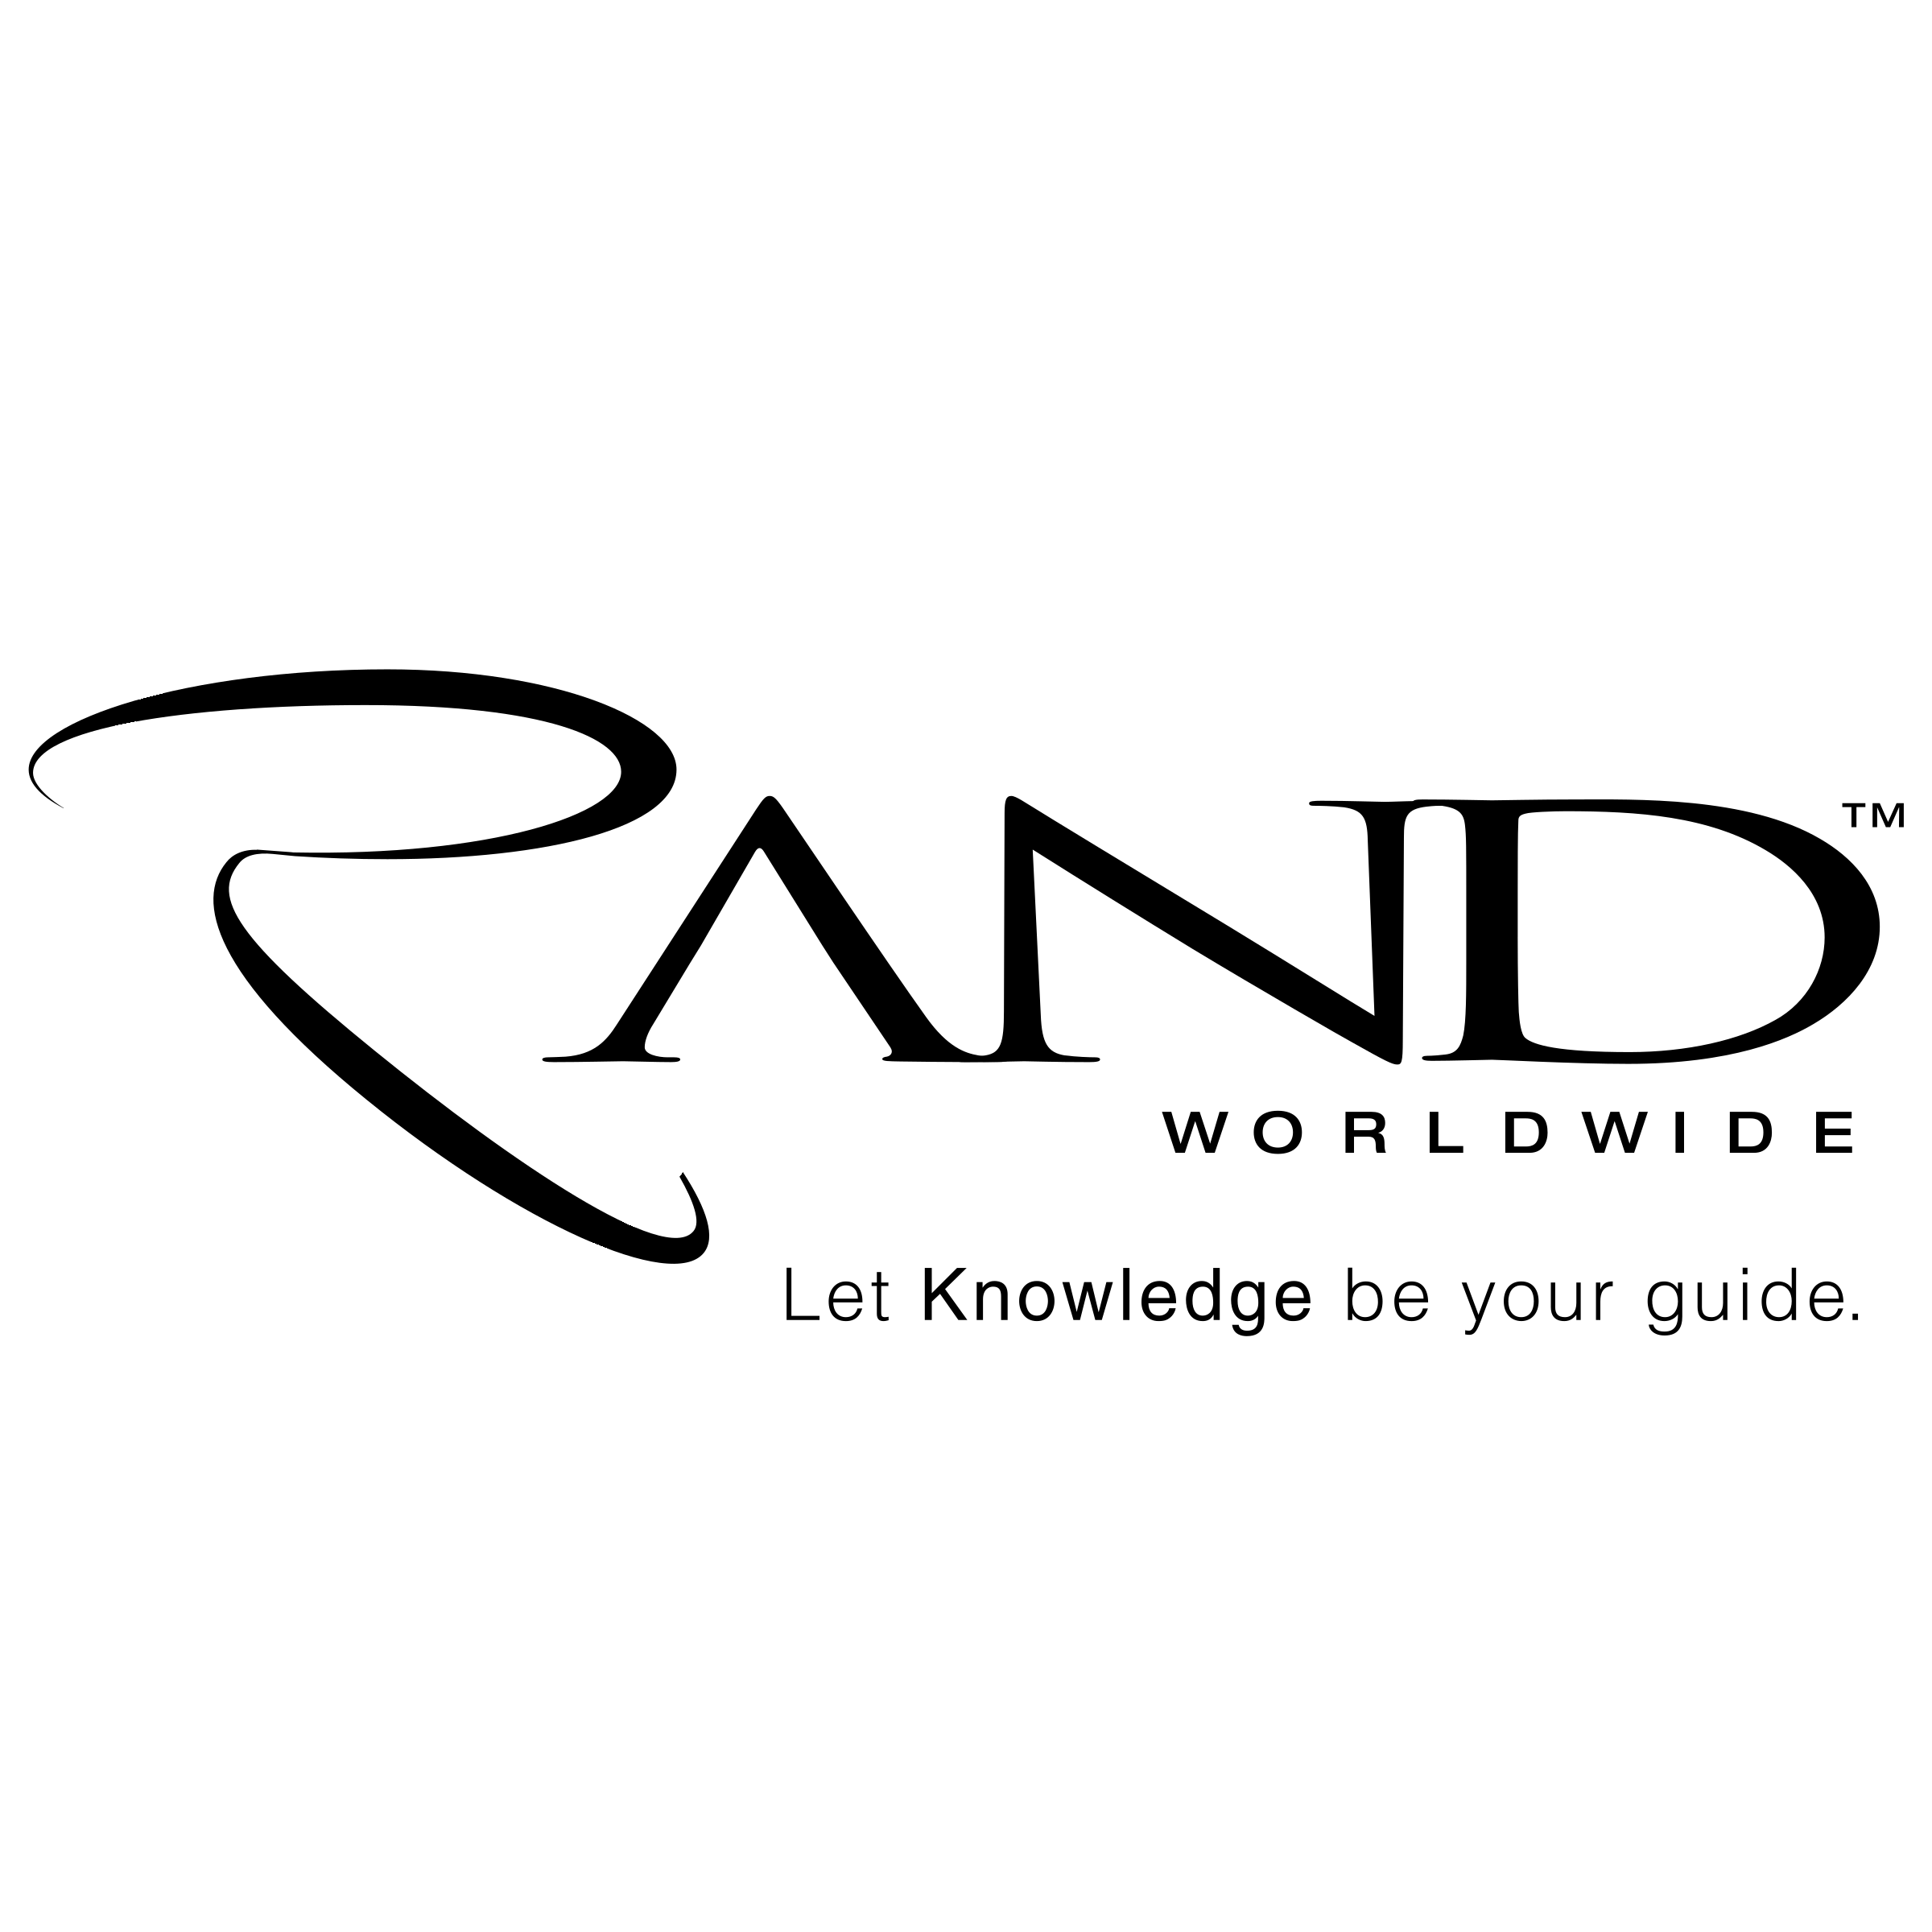 rand-worldwide-logo-black-and-white